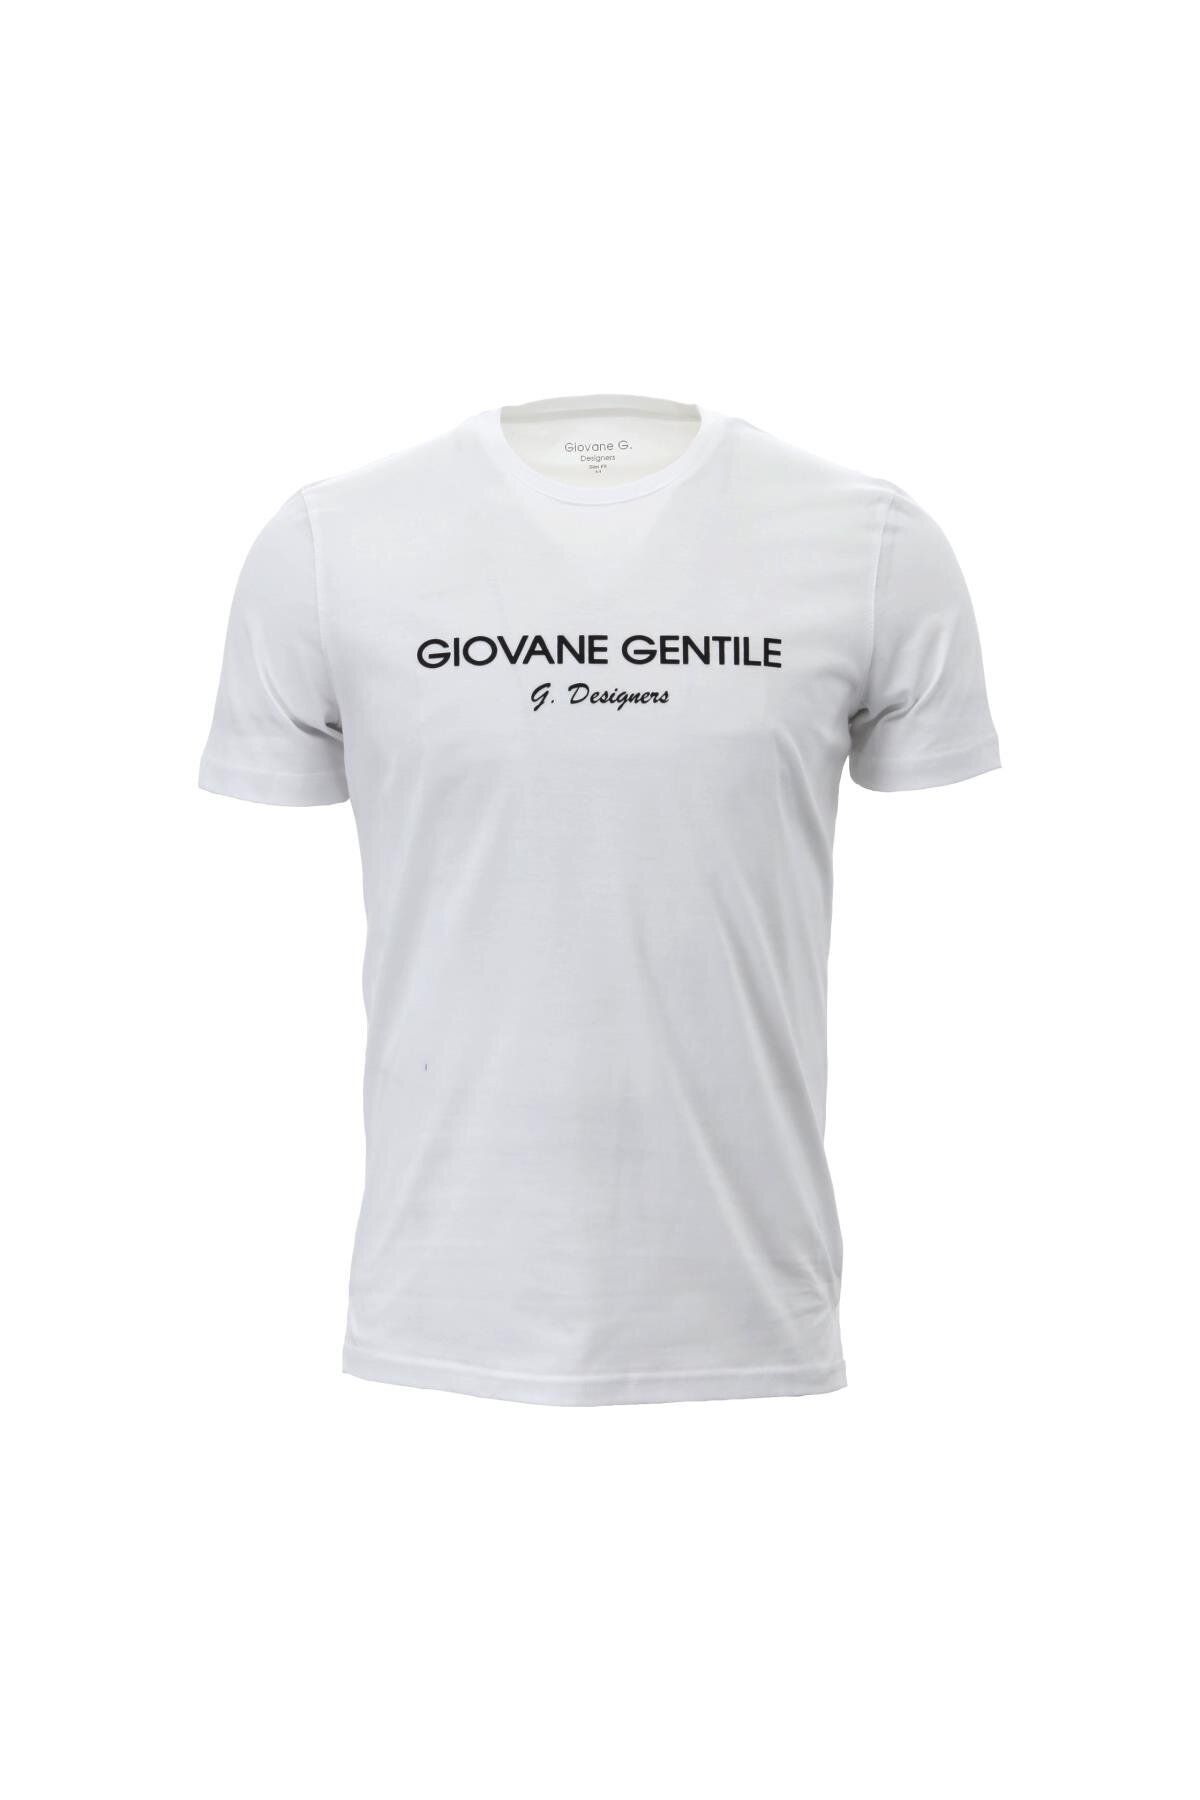 Giovane Gentile Giovane G. Designers T-Shirt